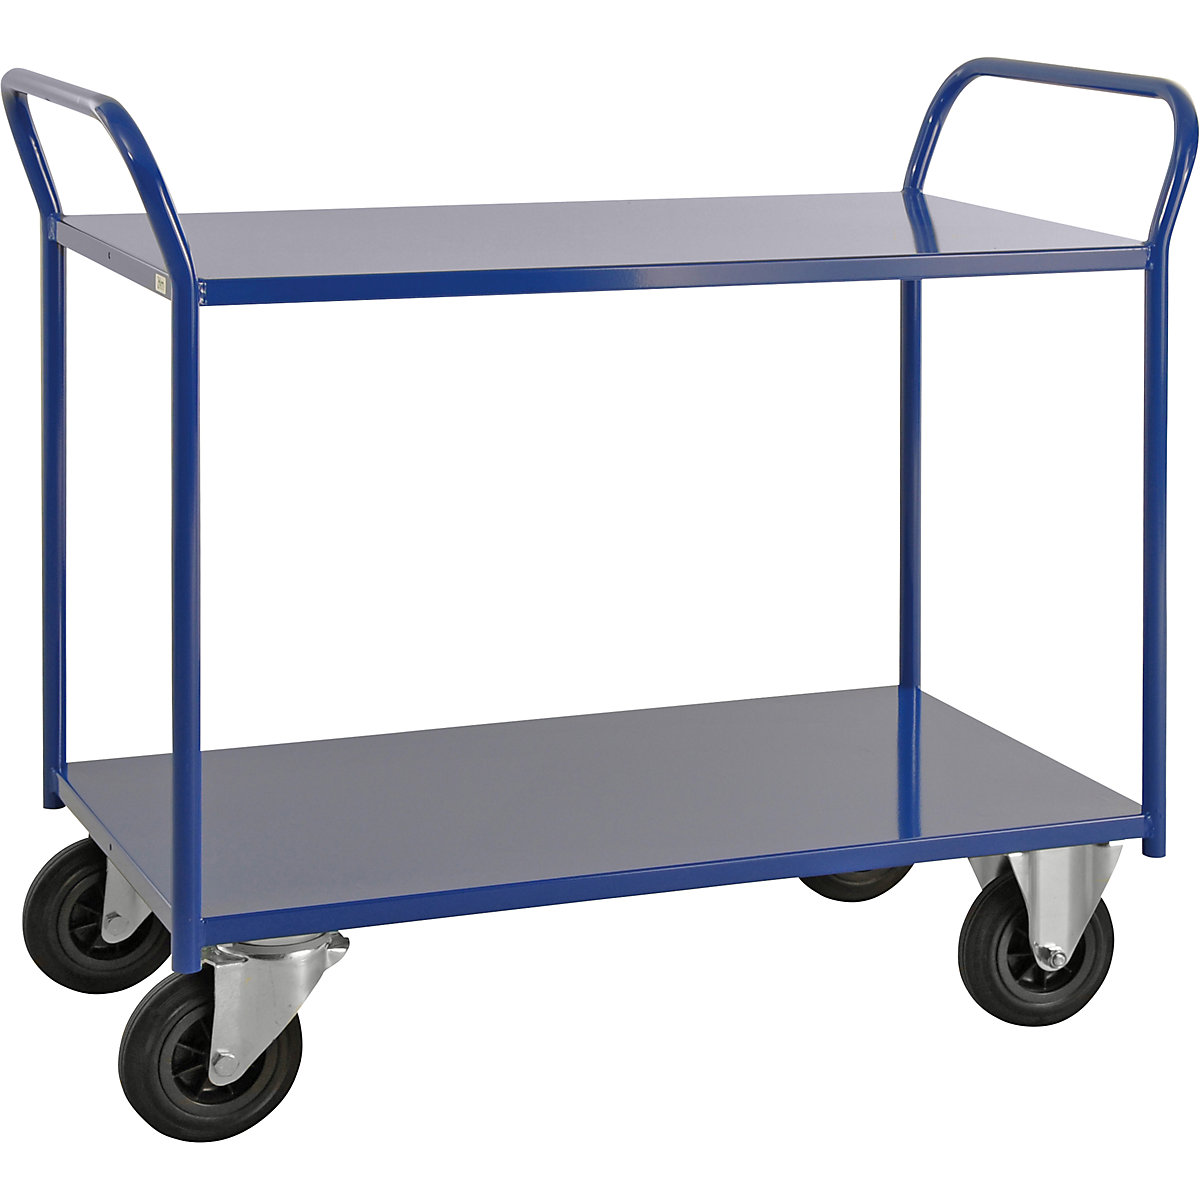 KM41 table trolley – Kongamek, 2 shelves, LxWxH 1080 x 450 x 975 mm, blue, 2 swivel castors with stops, 2 fixed castors, 5+ items-5